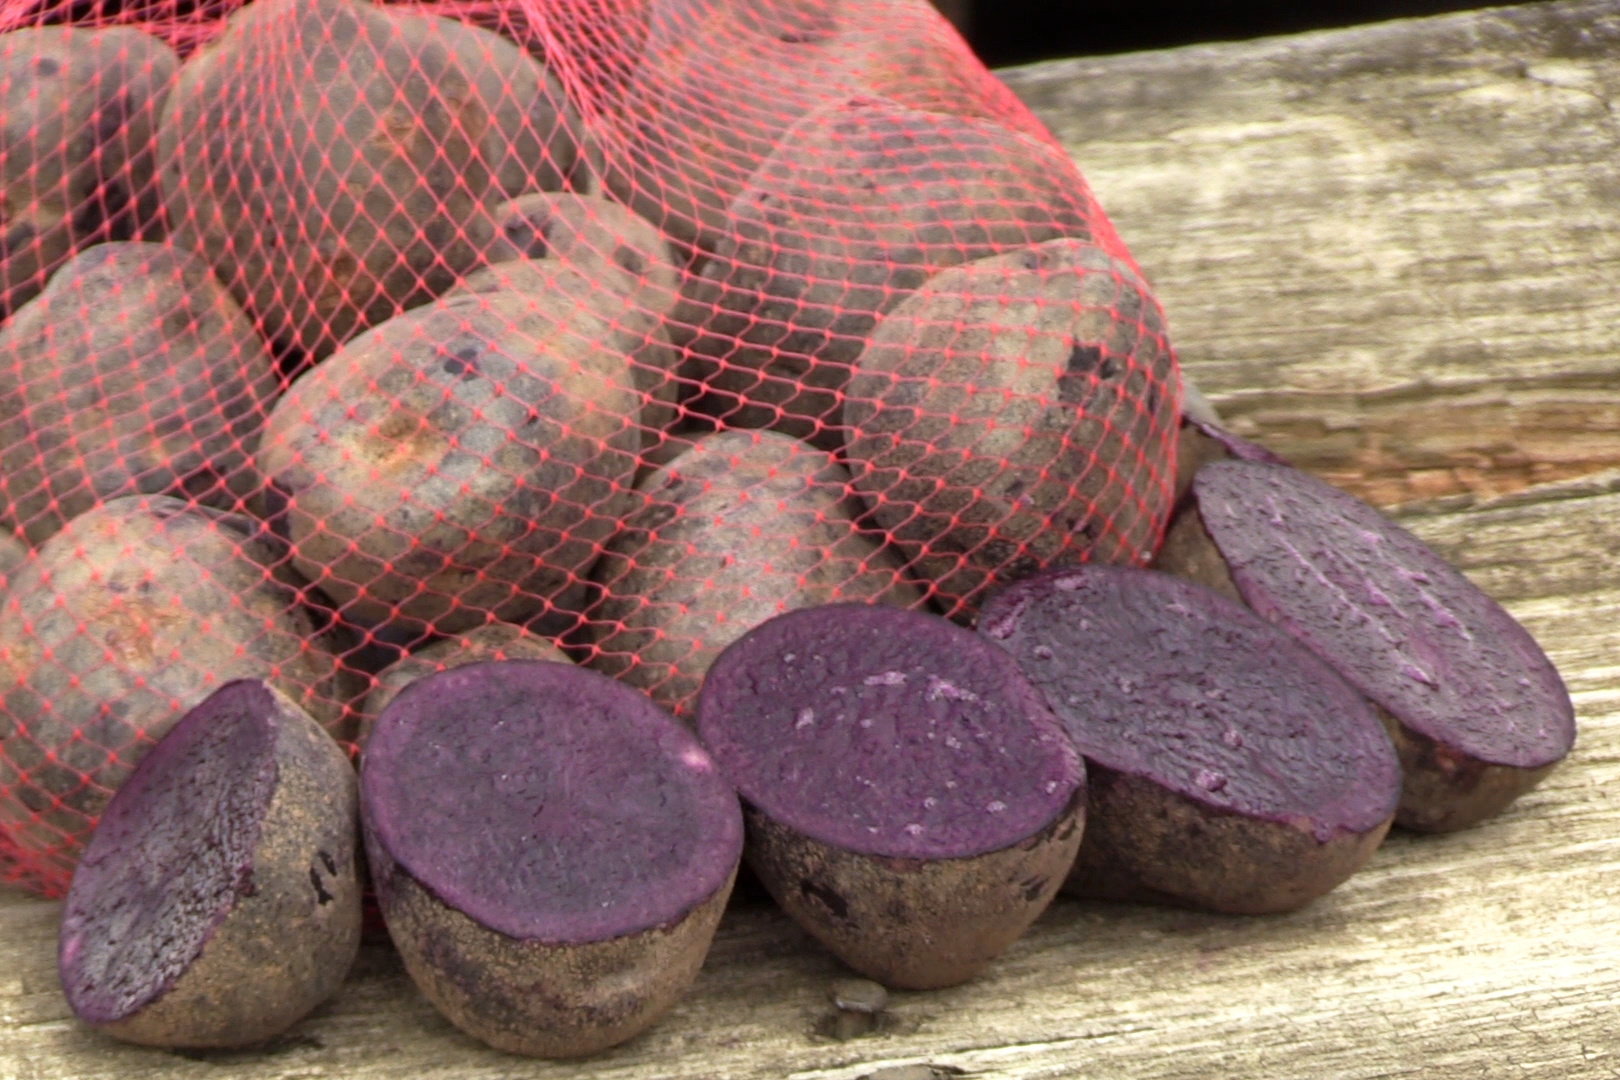 purple potatoes cut in half and in bag